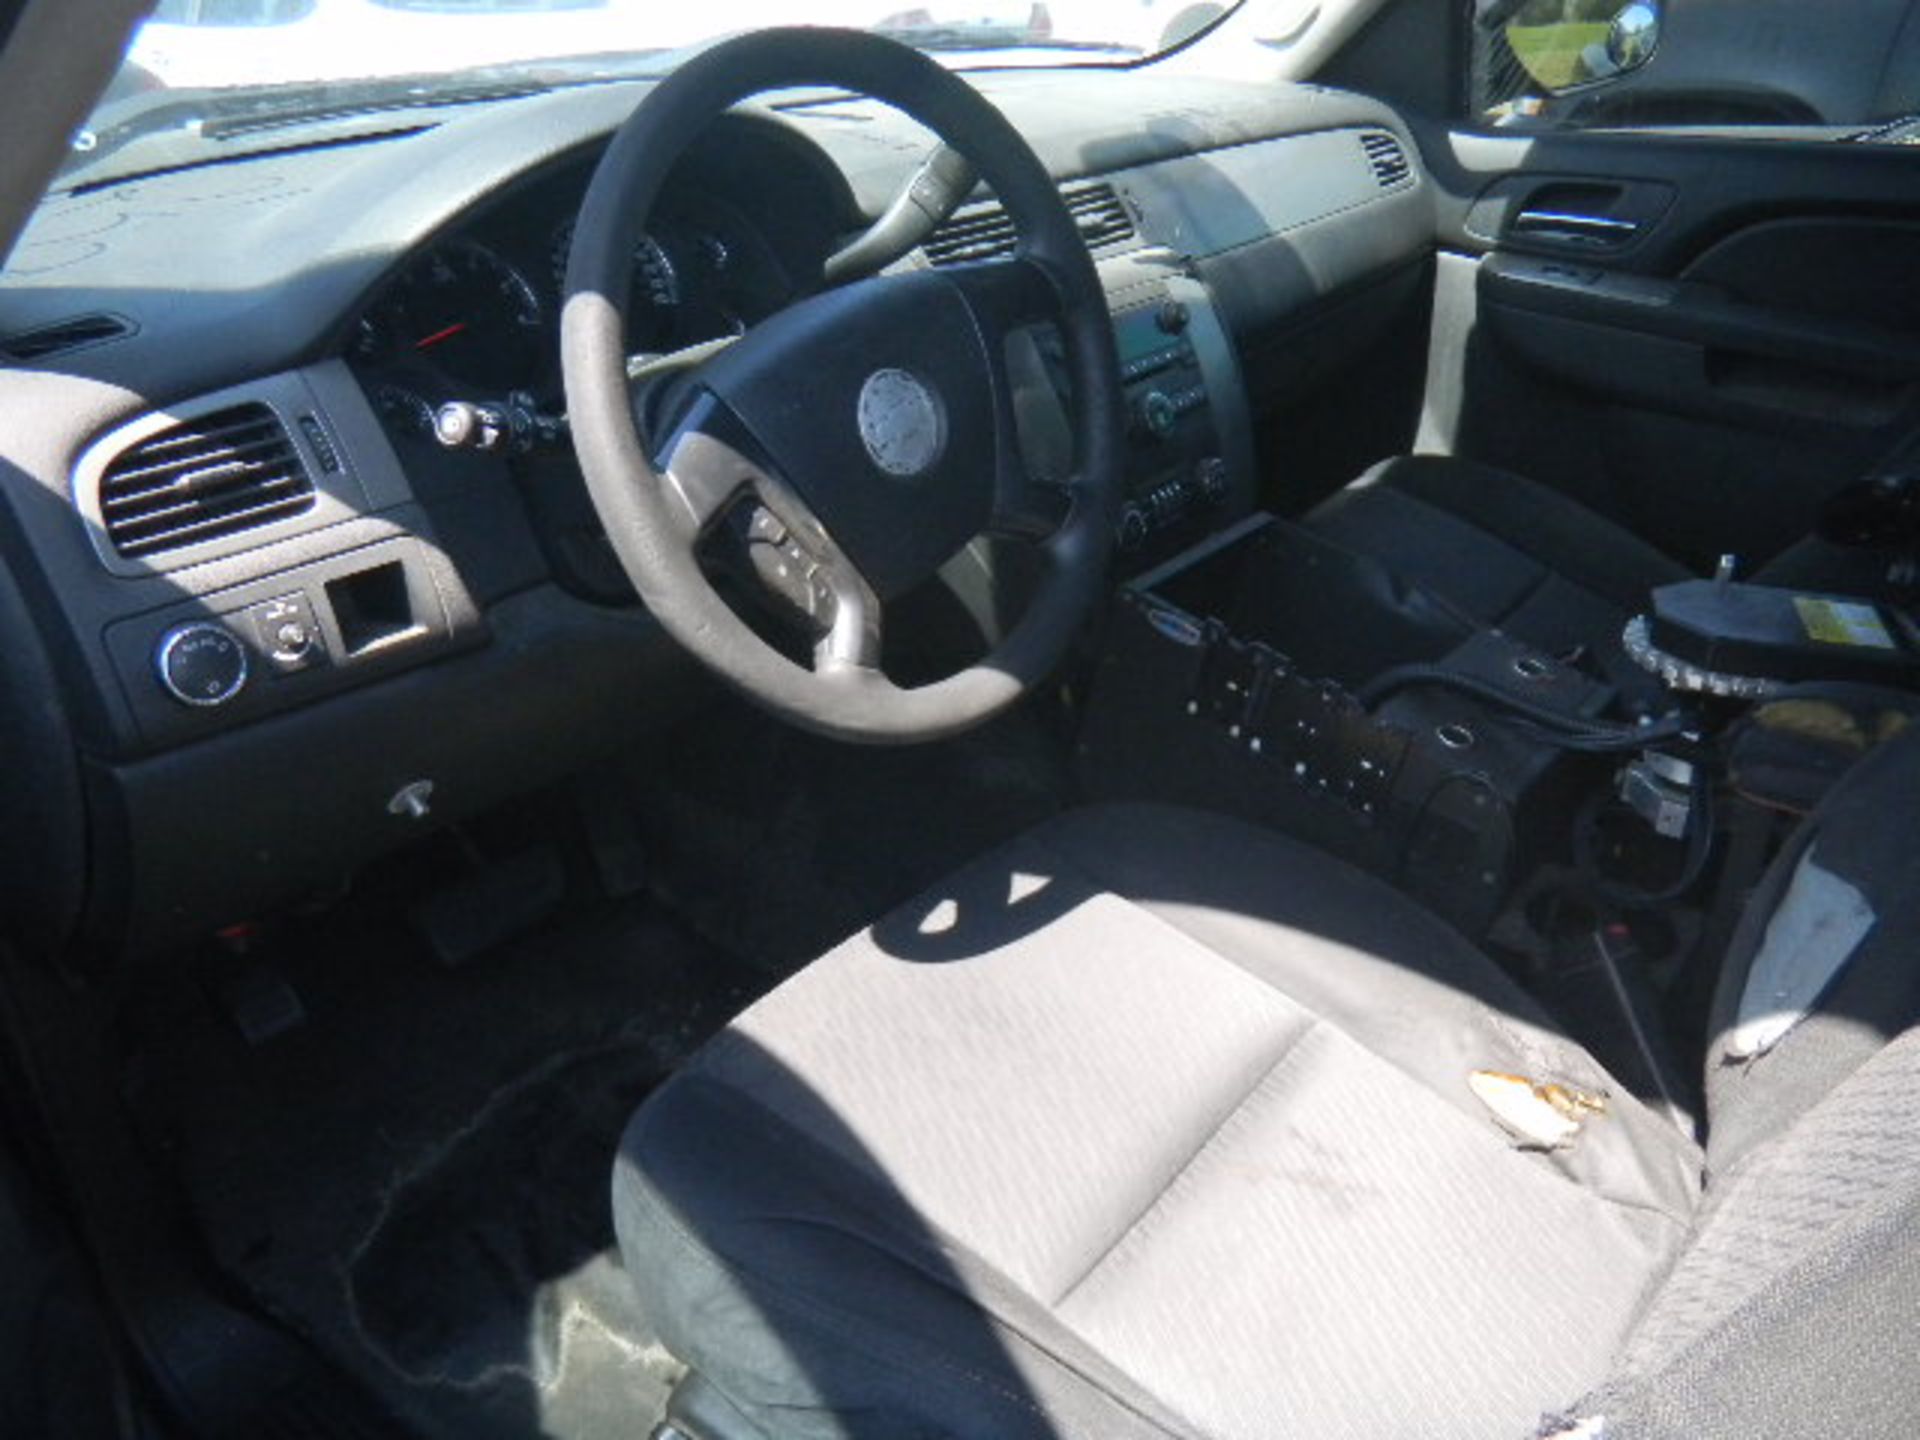 2010 Chevrolet Tahoe Black Patrol SUV - Asset I.D. #259 - Last of Vin (220846) - Image 6 of 9